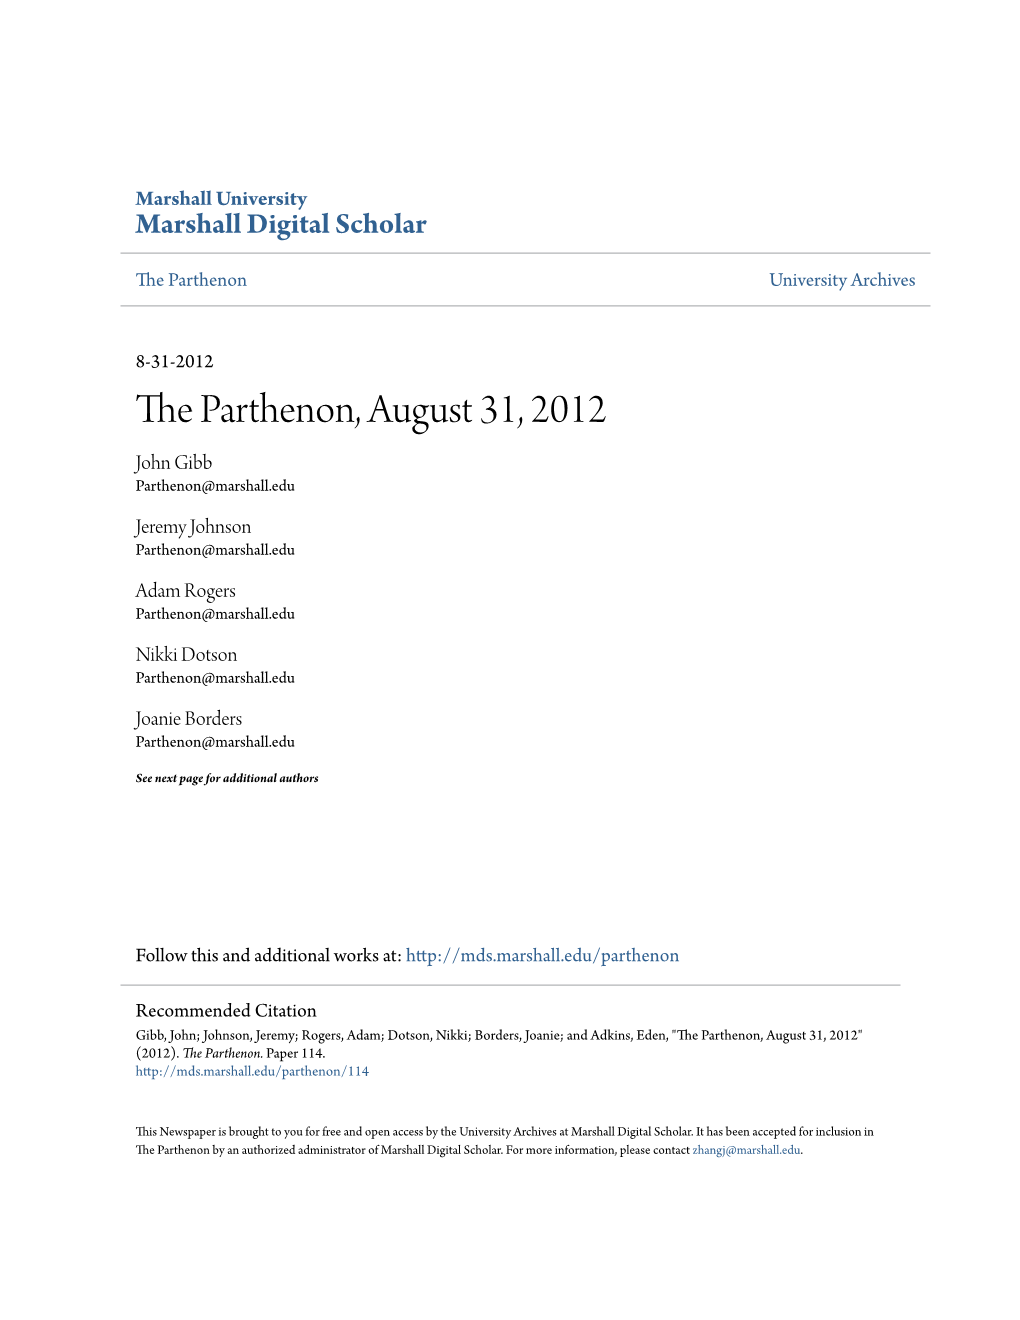 The Parthenon, August 31, 2012